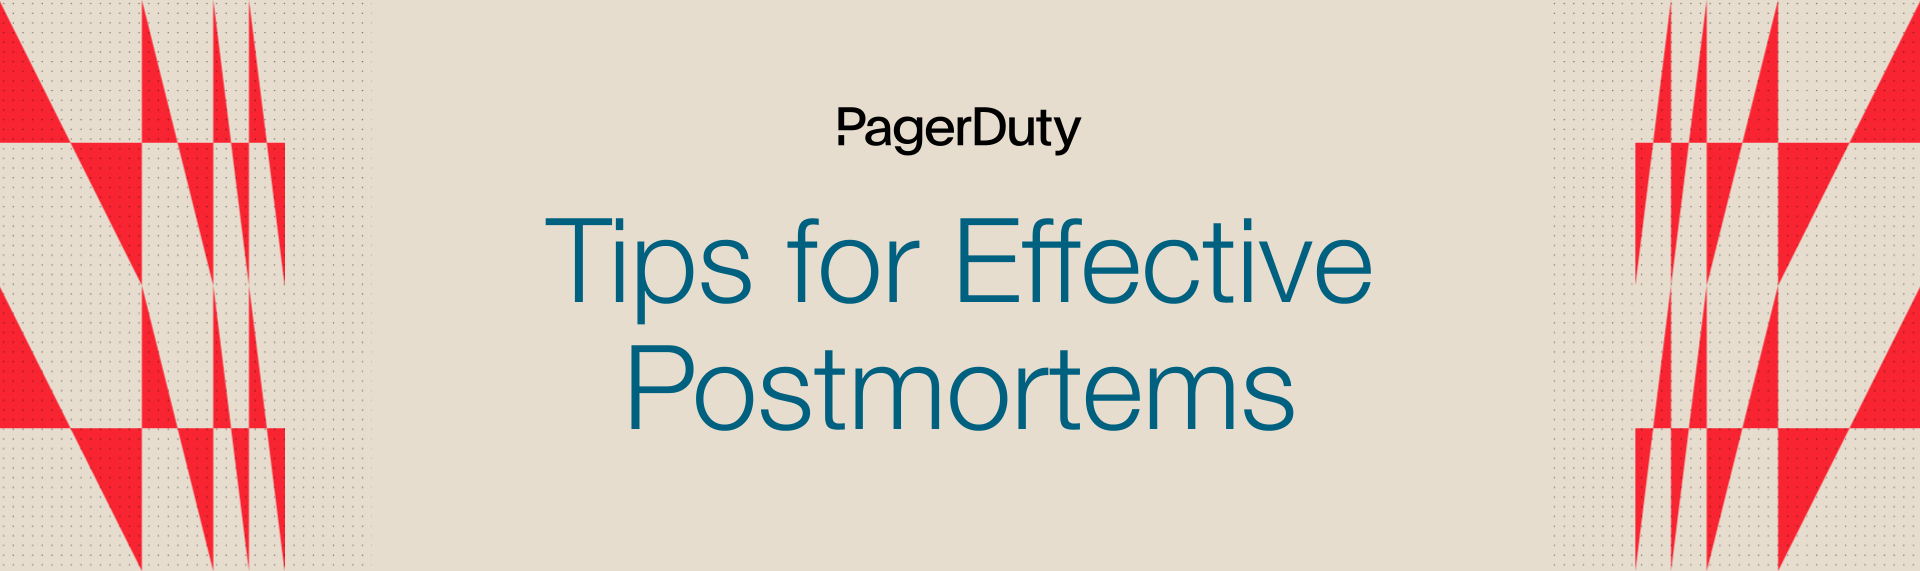 Effective Postmortems